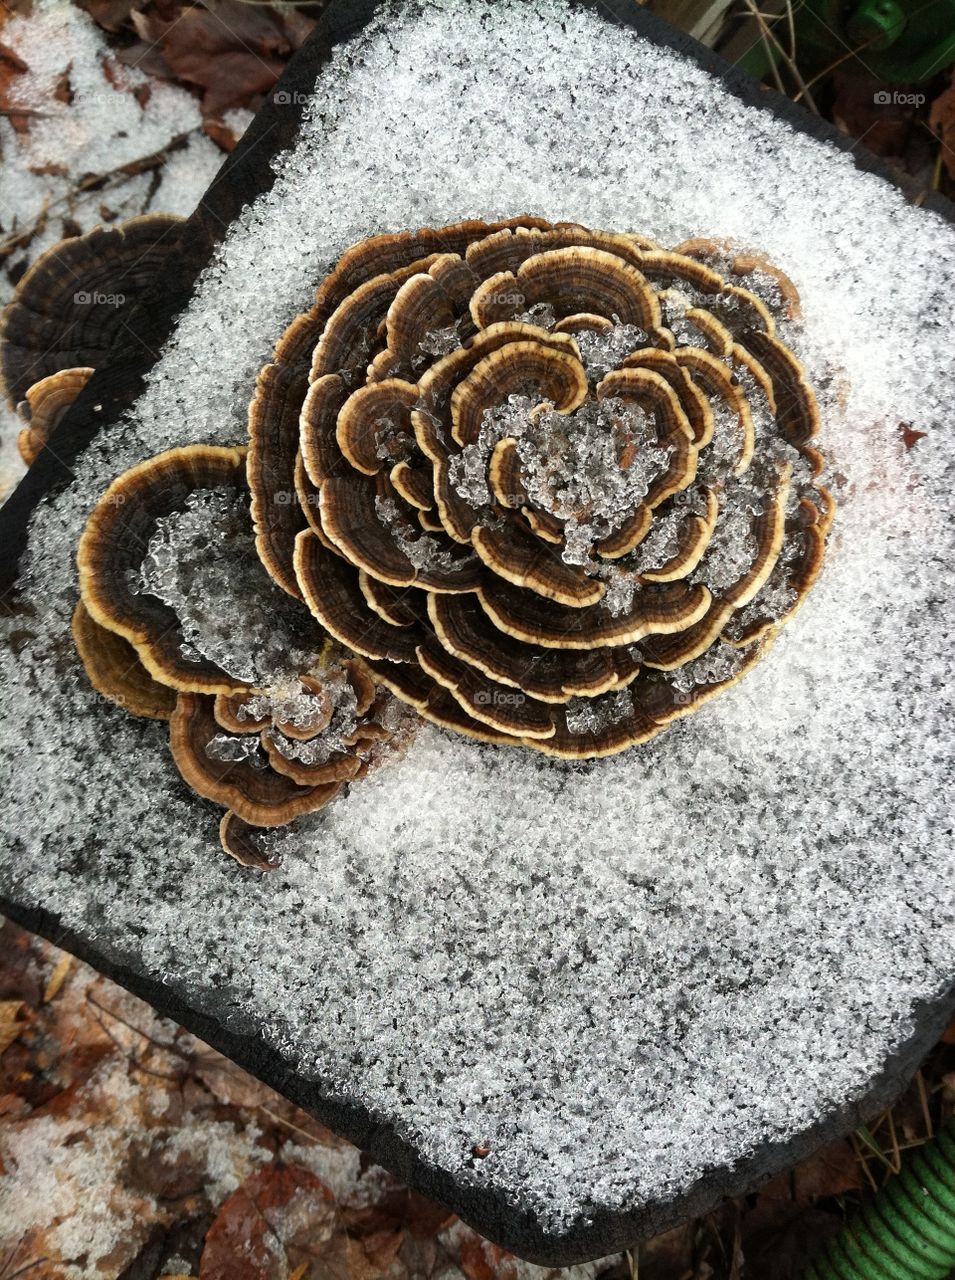 Flower shaped mushroom covered in snow